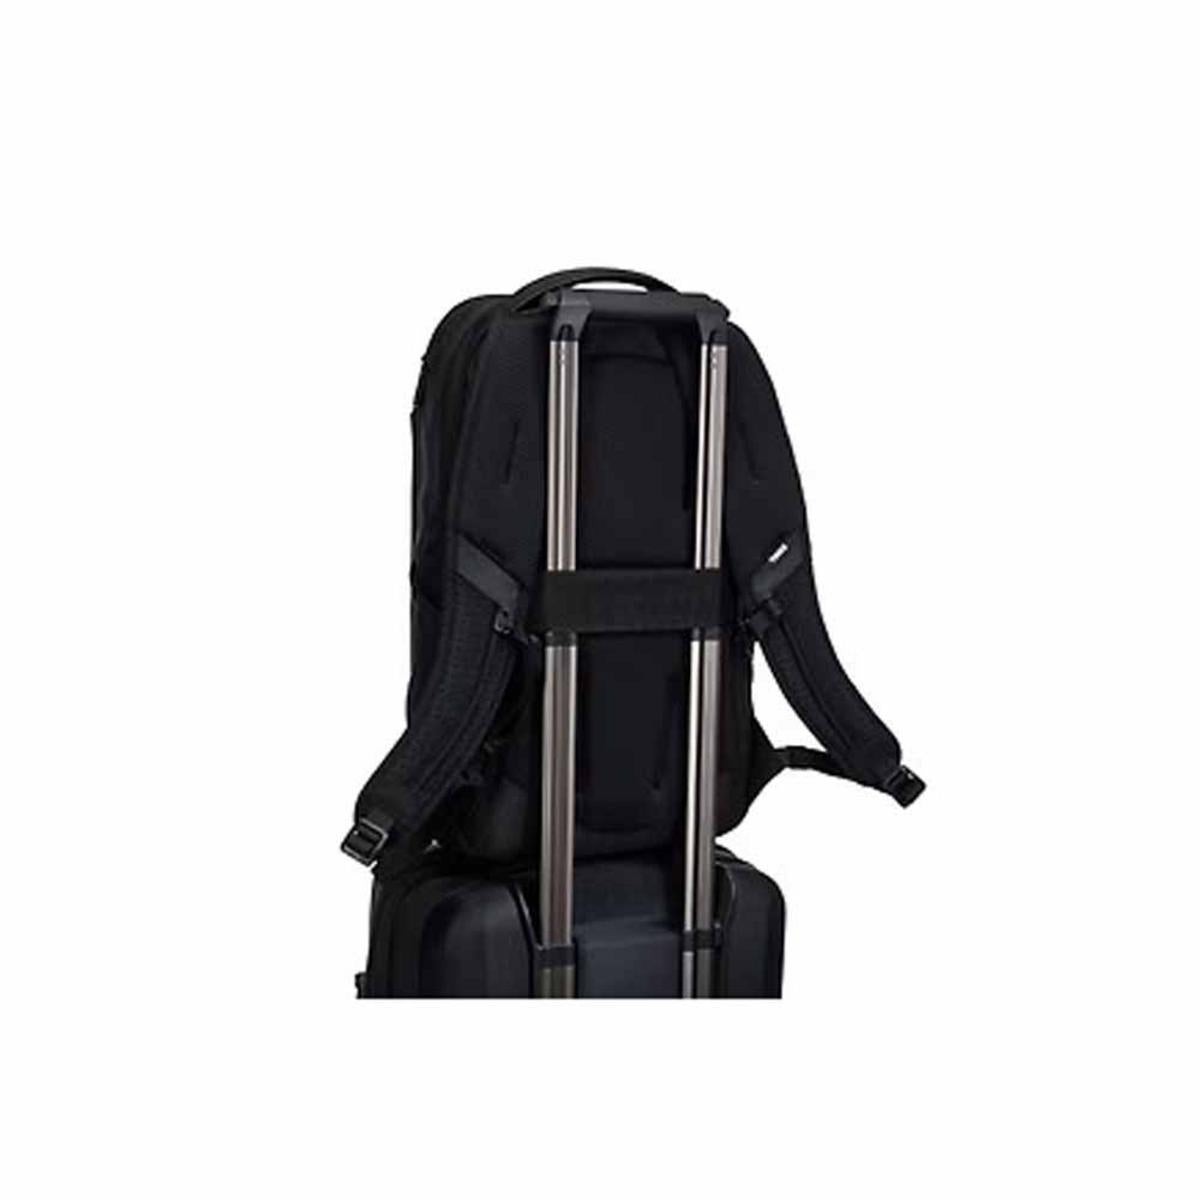 Thule Accent 23L Laptop Backpack - Black